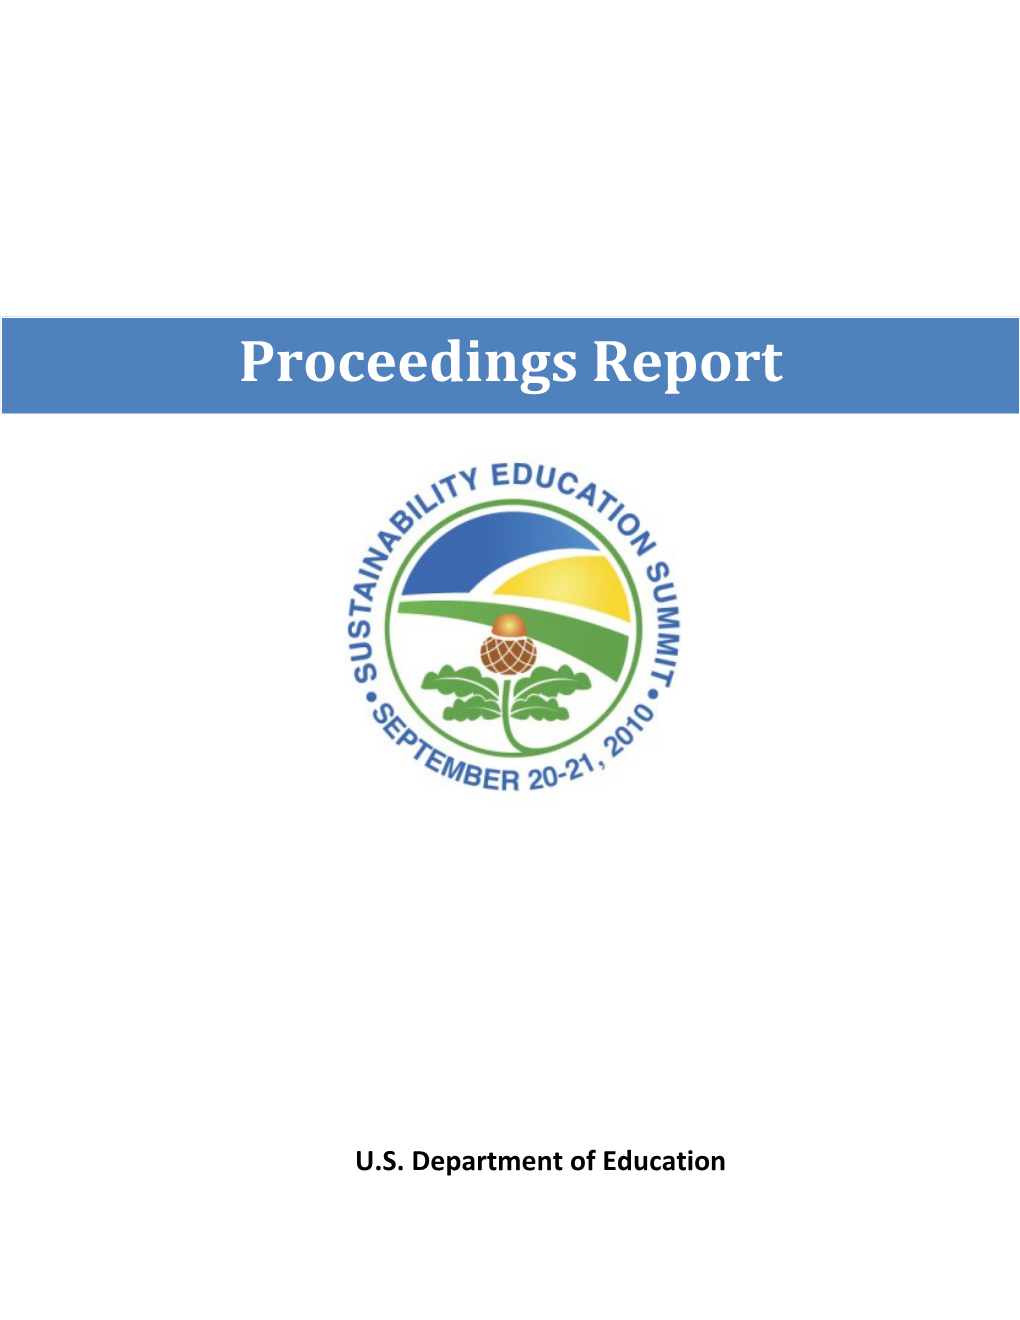 2010 Sustainability Education Summit: Proceedings Report November 2011 (Msword)